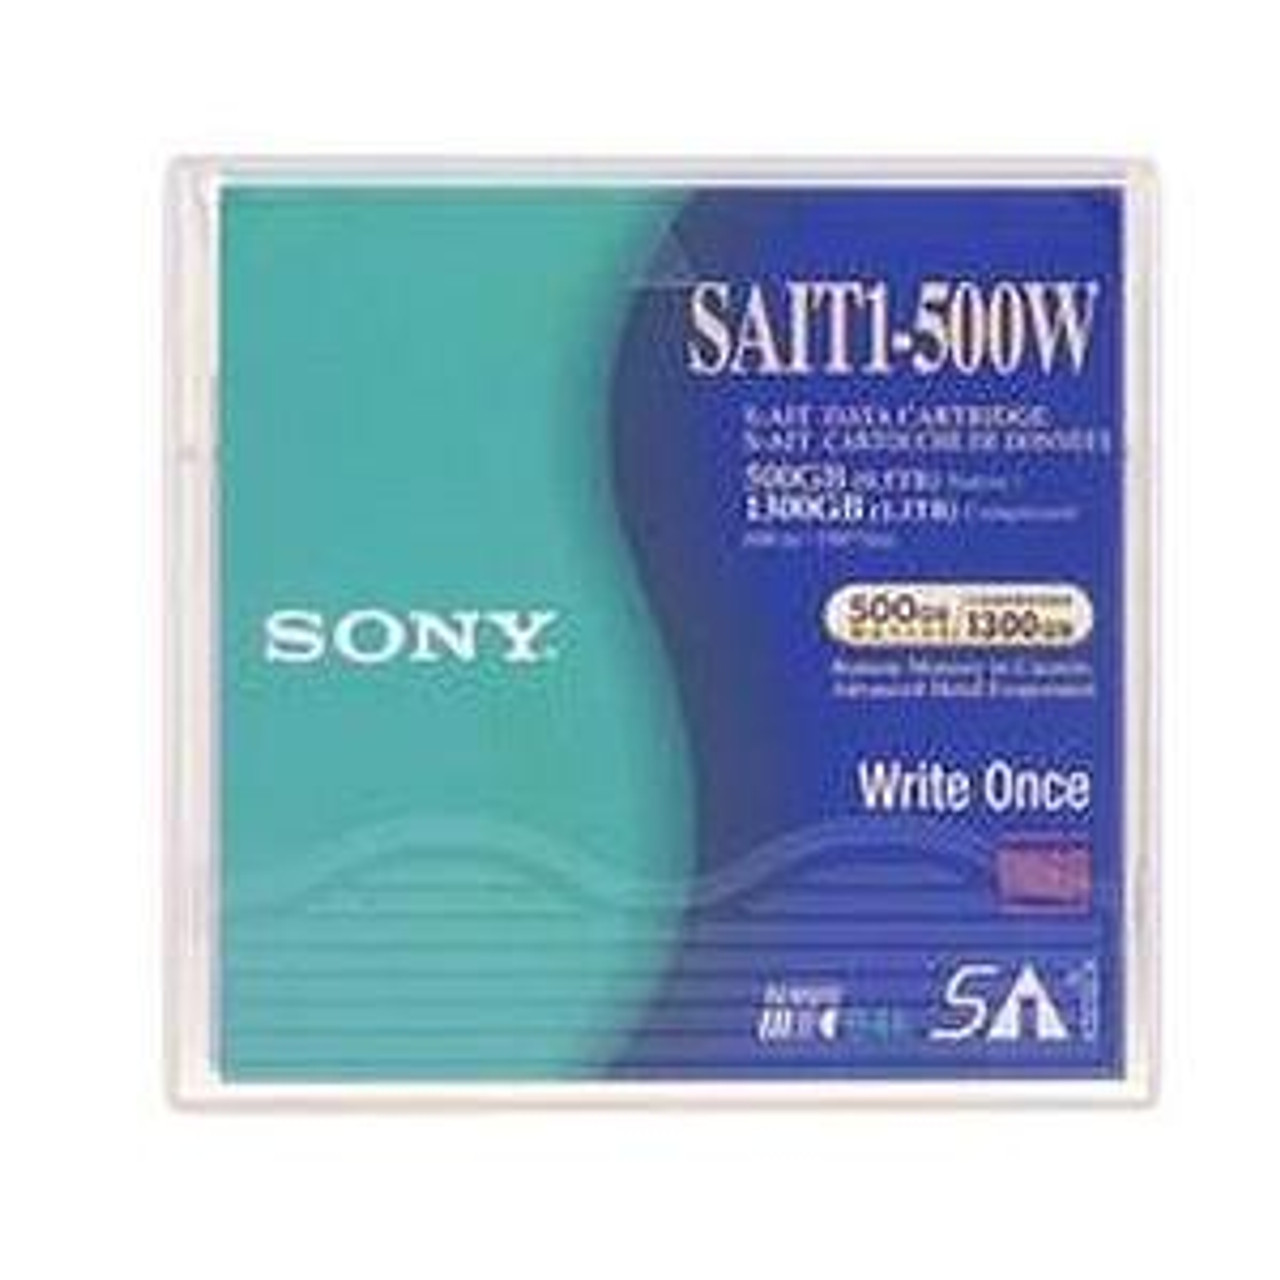 SAIT1-500W - Sony S-AIT1 WORM Tape Cartridge - SAIT SAIT-1 - 500GB (Native) / 1.3TB (Compressed)